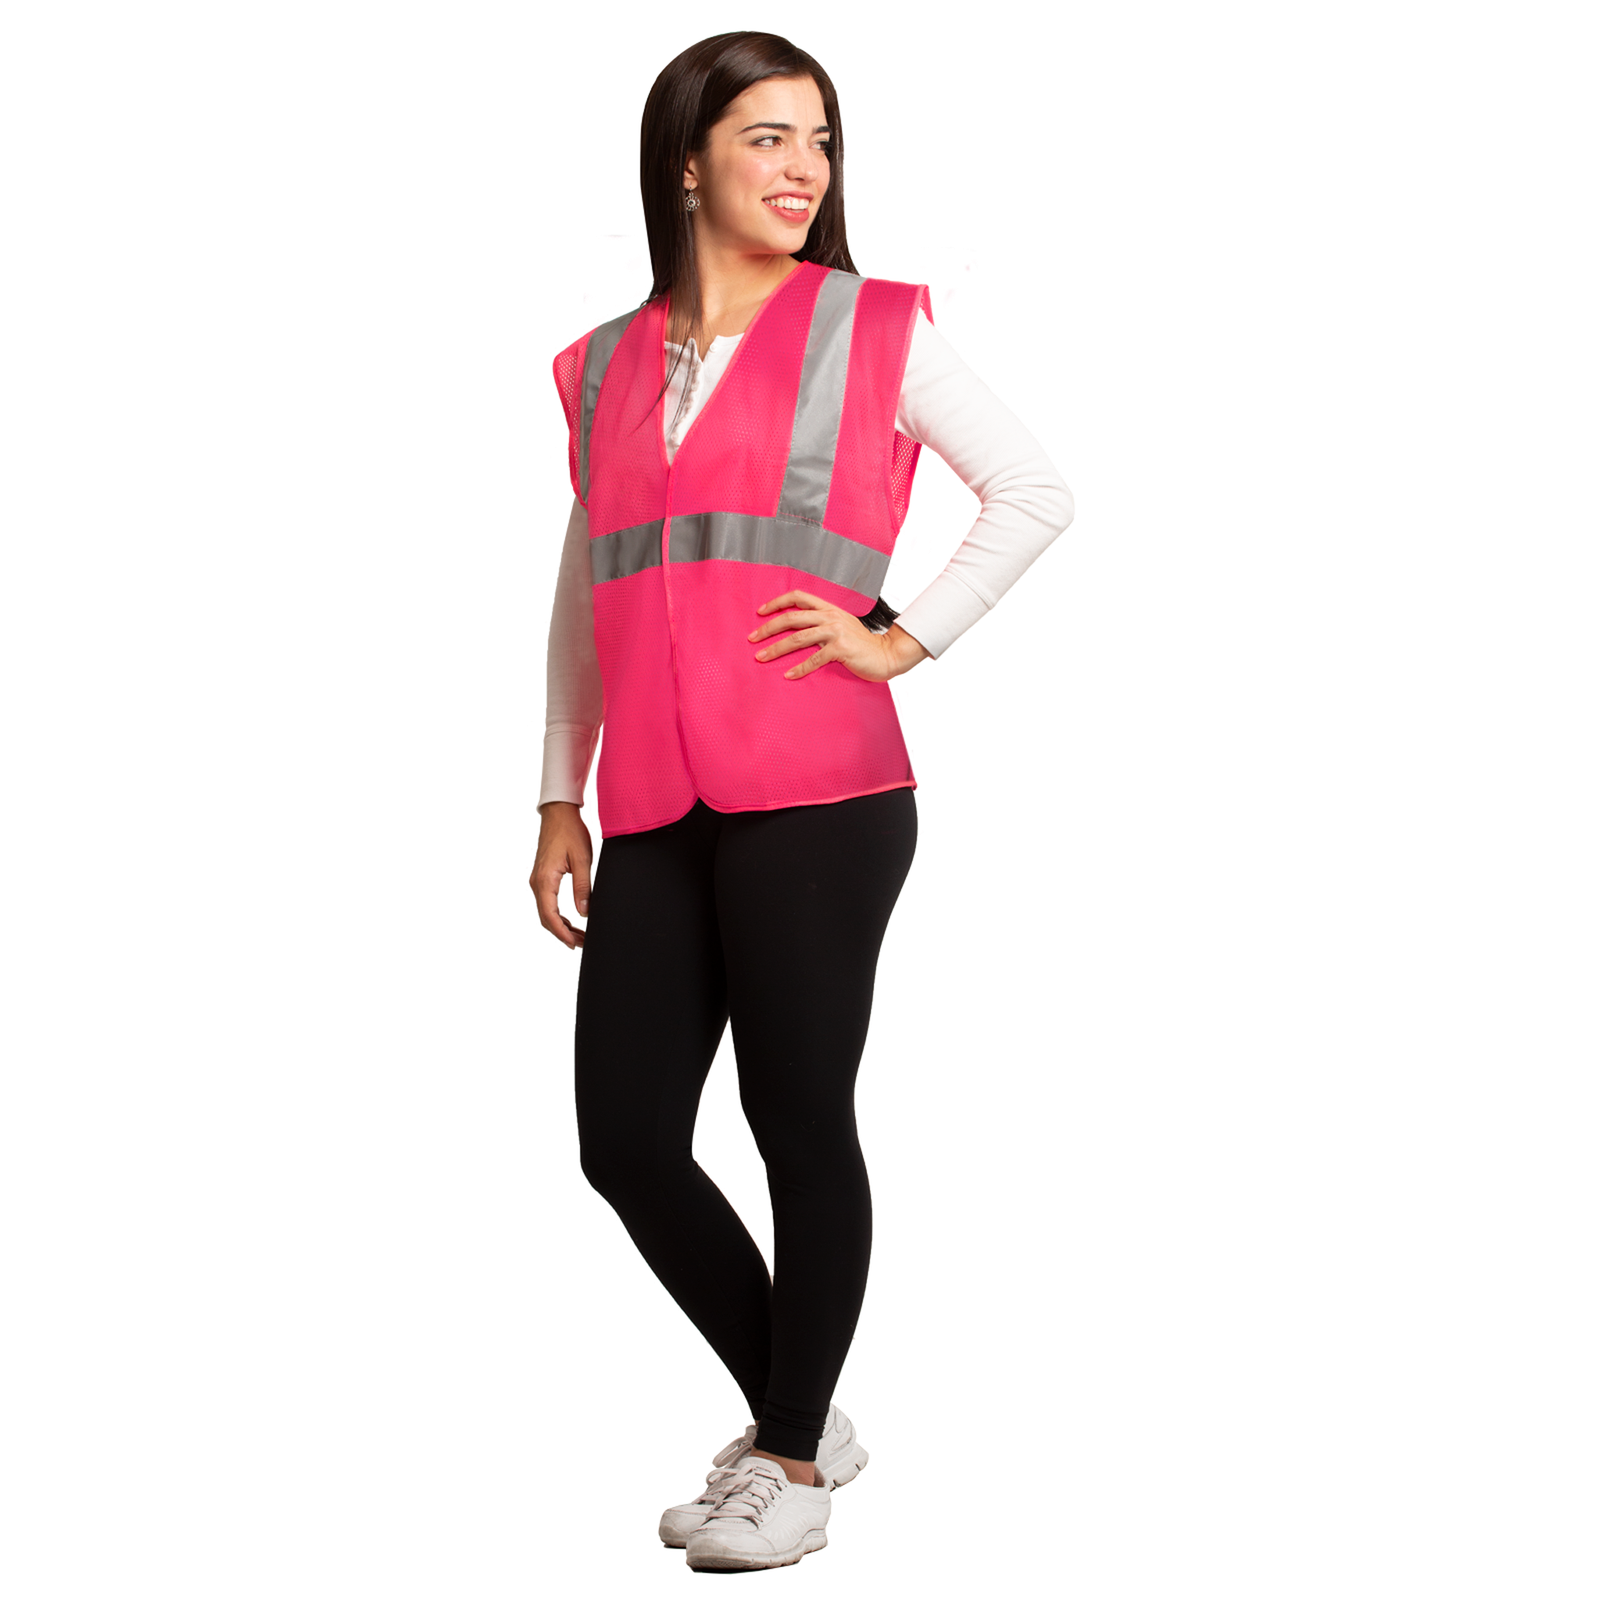 Woman wearing a pink JORESTECH hi visibility safety vest